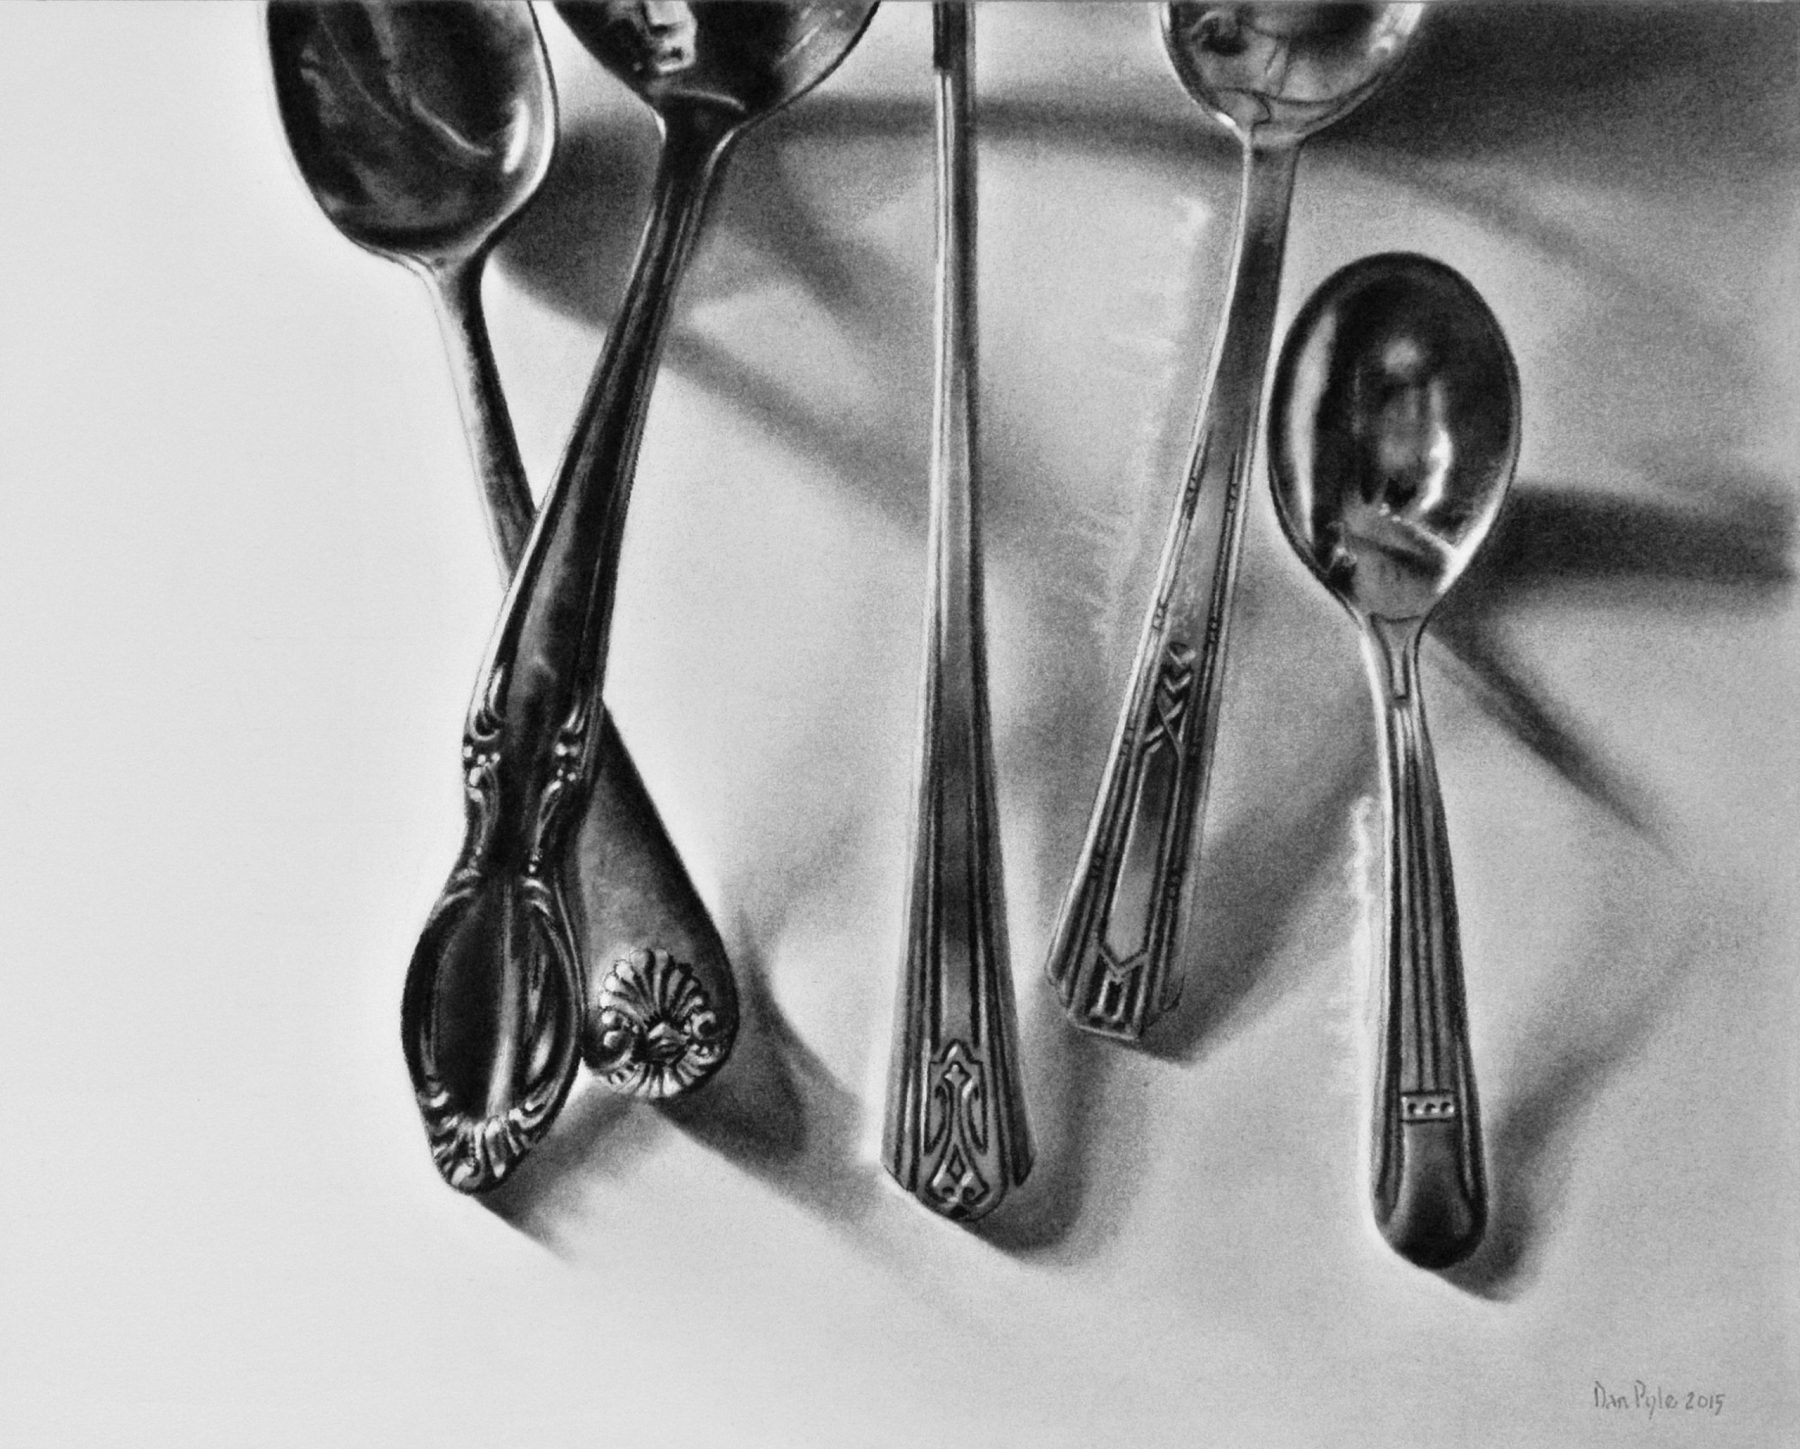 Ladle among the spoons - Pyle, Dan - k-2009DP2